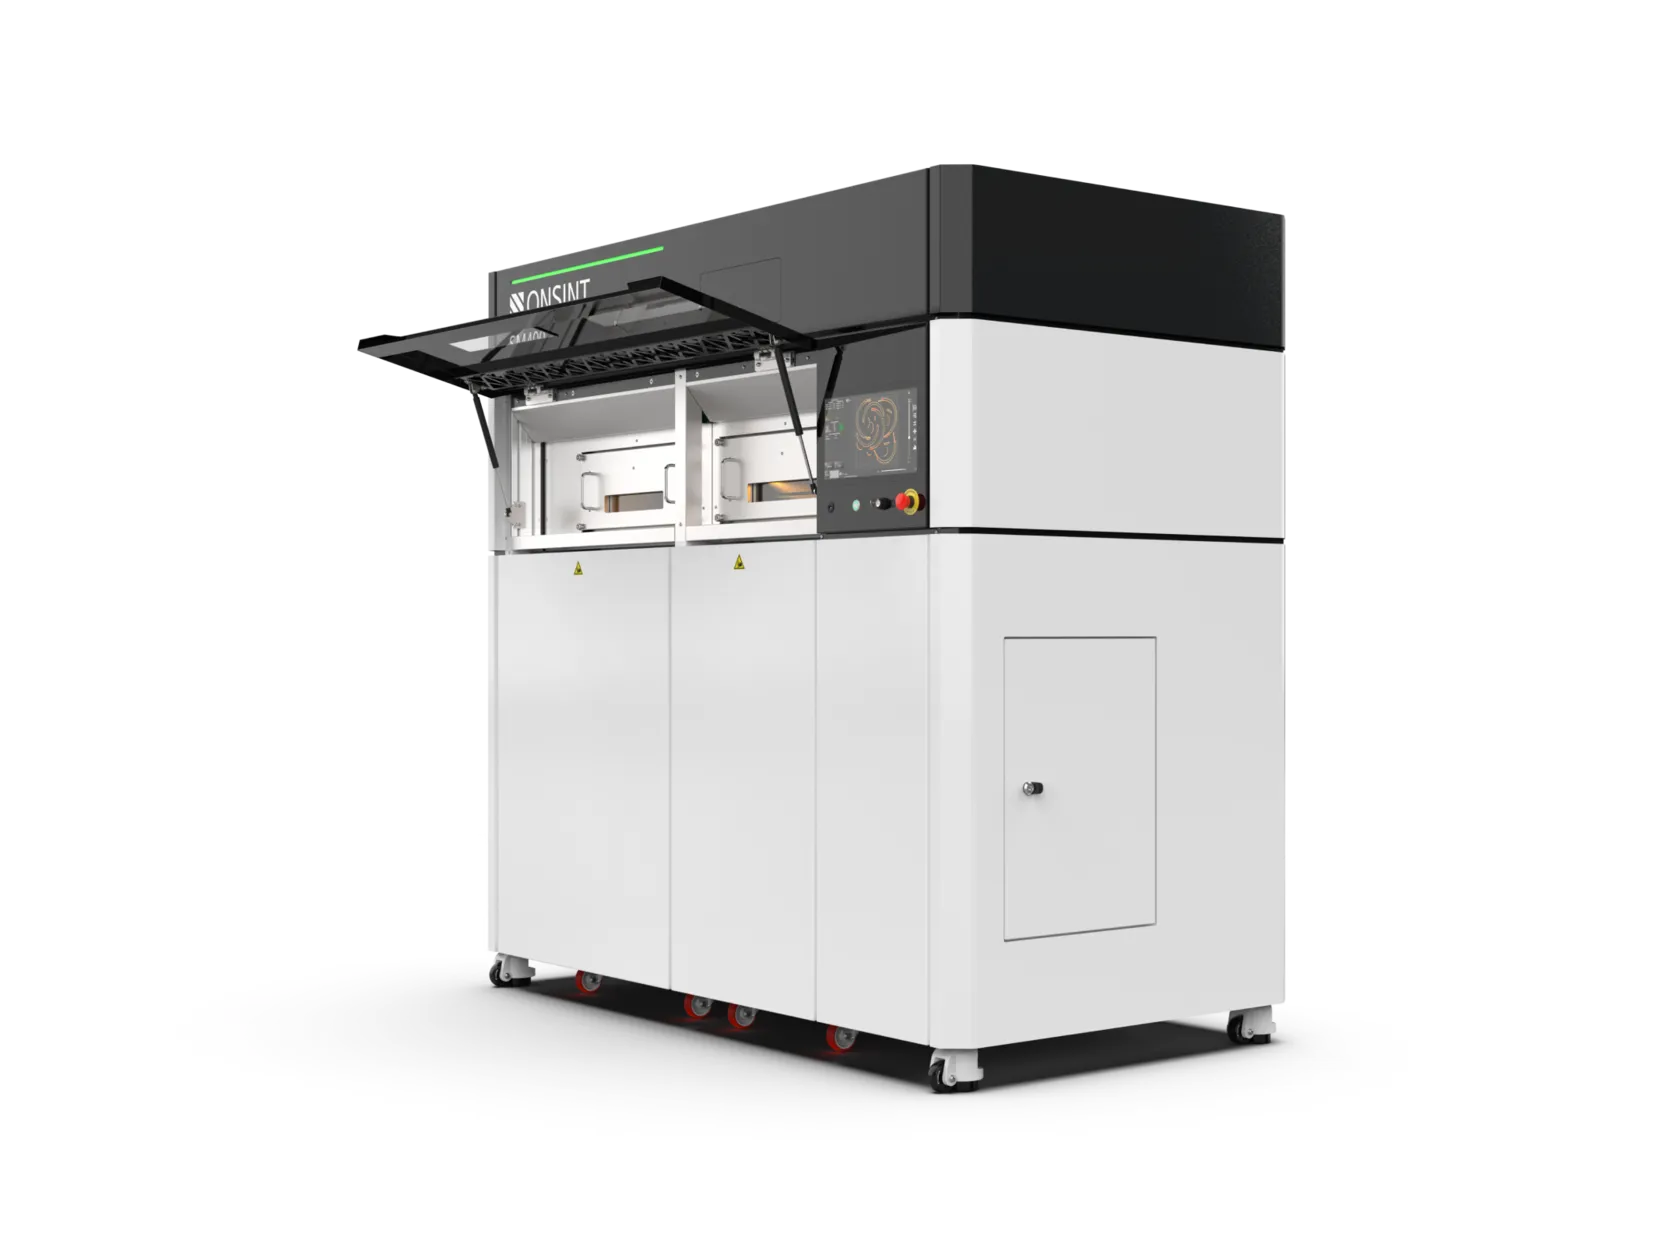 3D-принтер ONSINT SM400